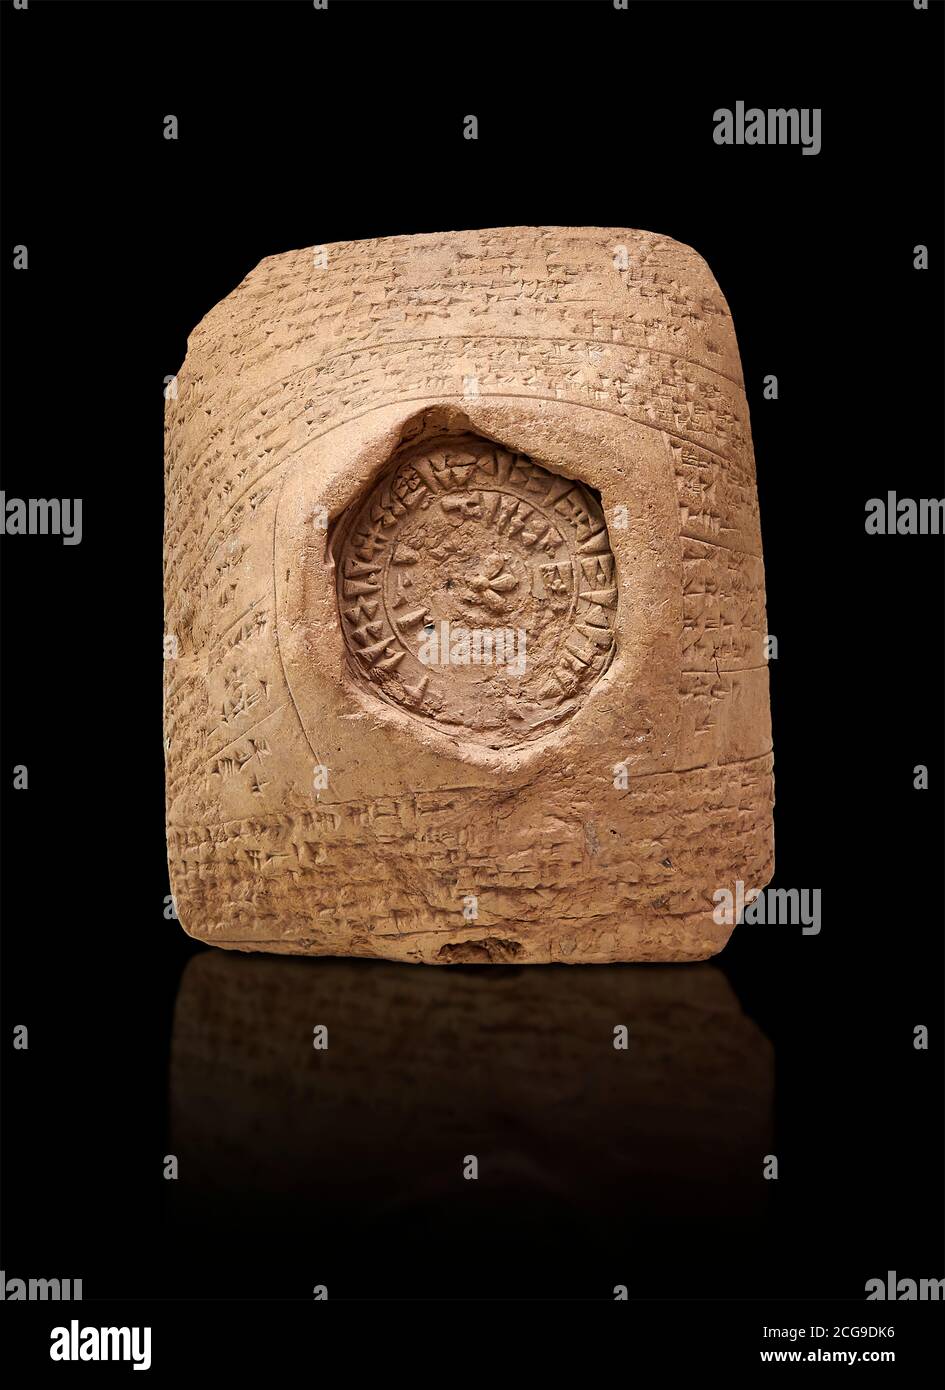 Hittite cuneiform clay tablet,  Hattusa, Hittite  Kingdom 1600-1200 BC, Bogazkale archaeological Museum, Turkey. Black background Stock Photo